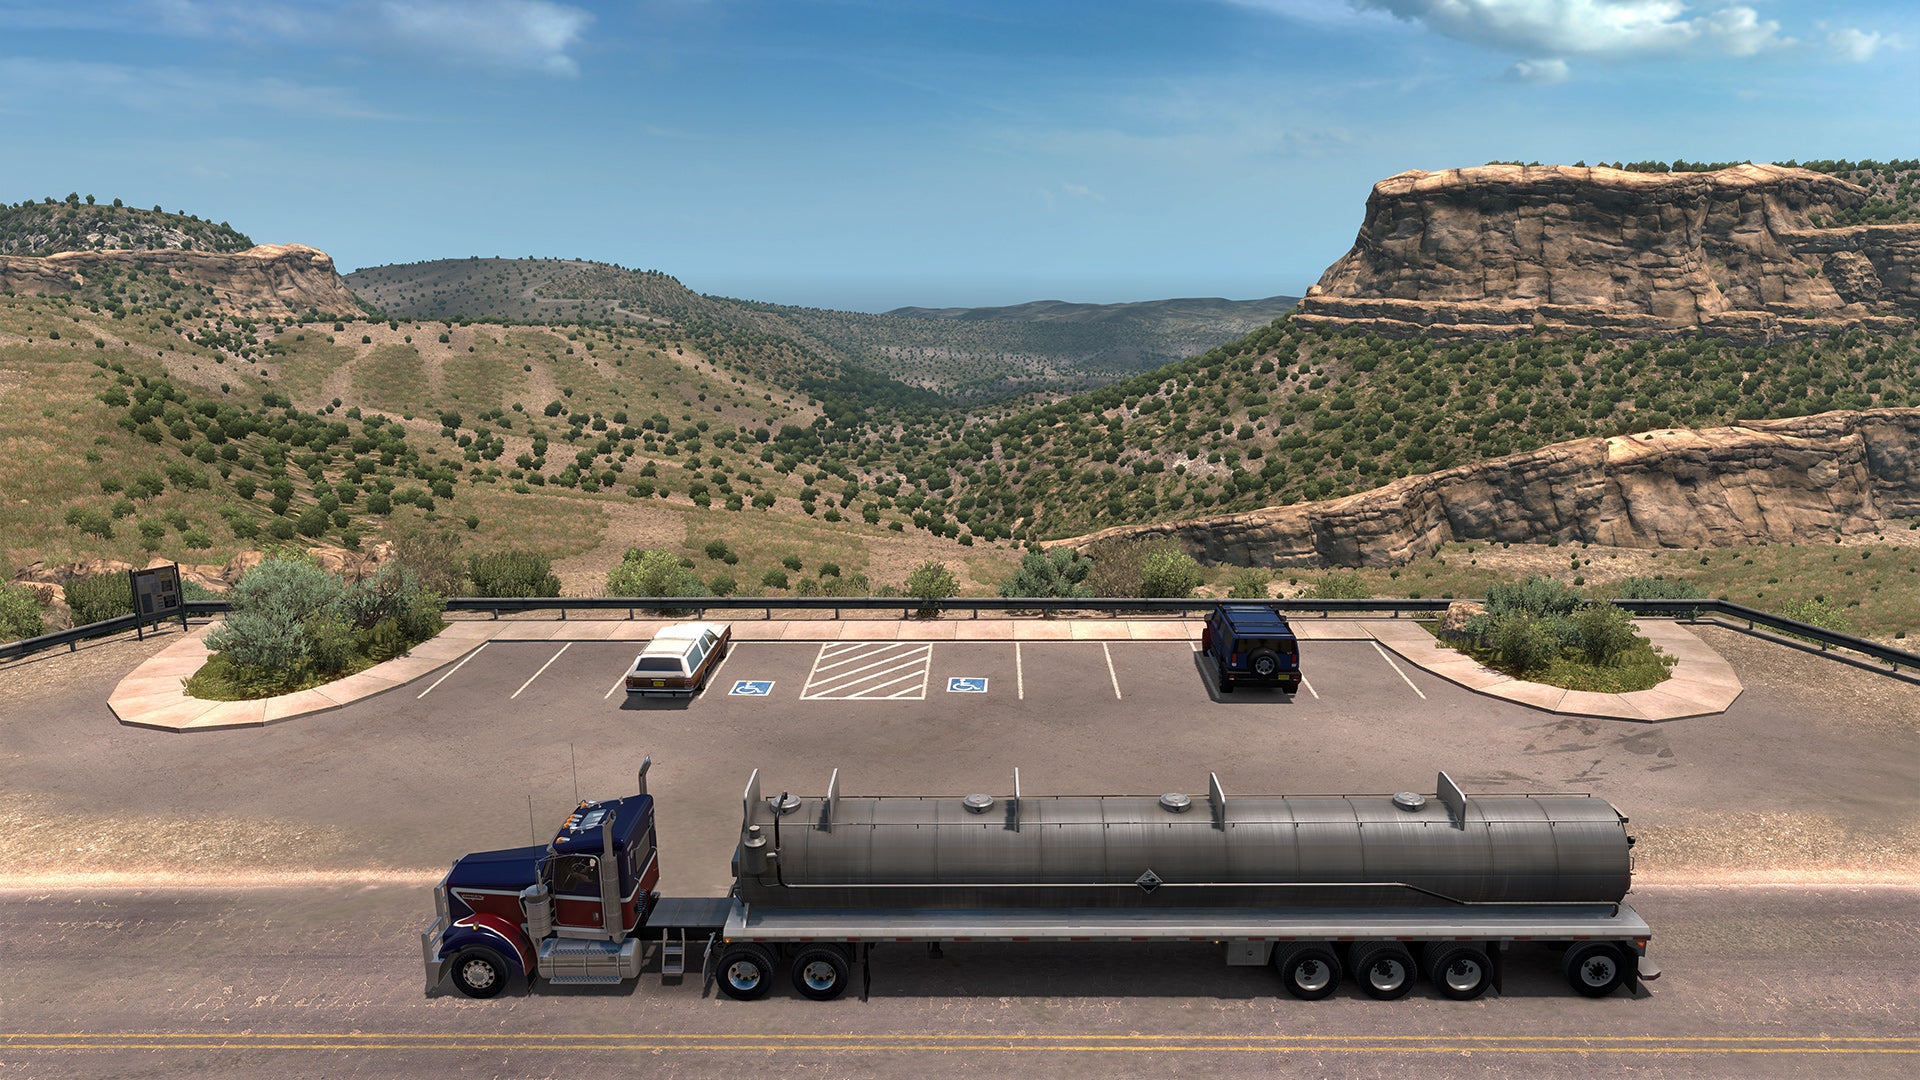 American truck Simulator: New Mexico Add-On